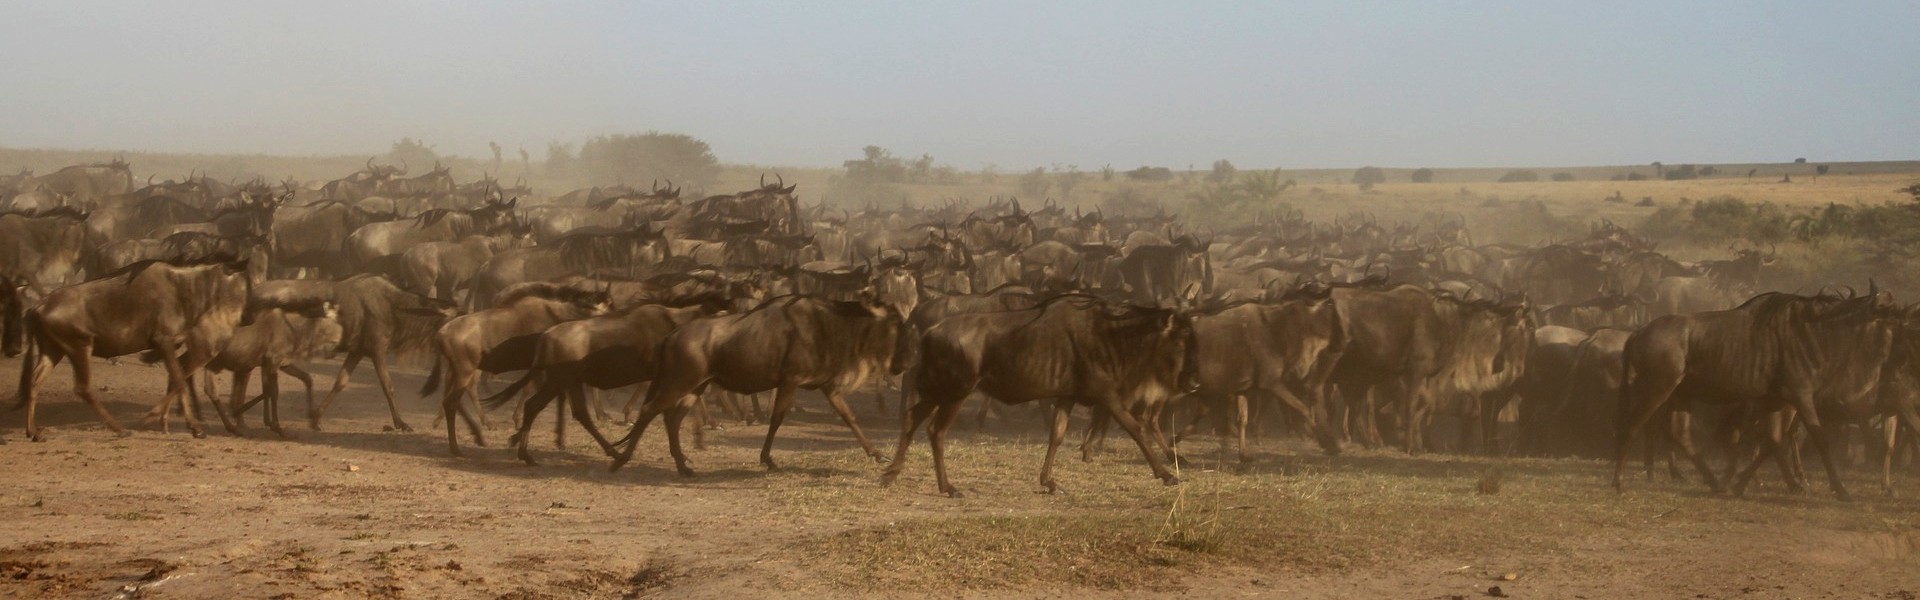 Safari Kenia Massai Mara